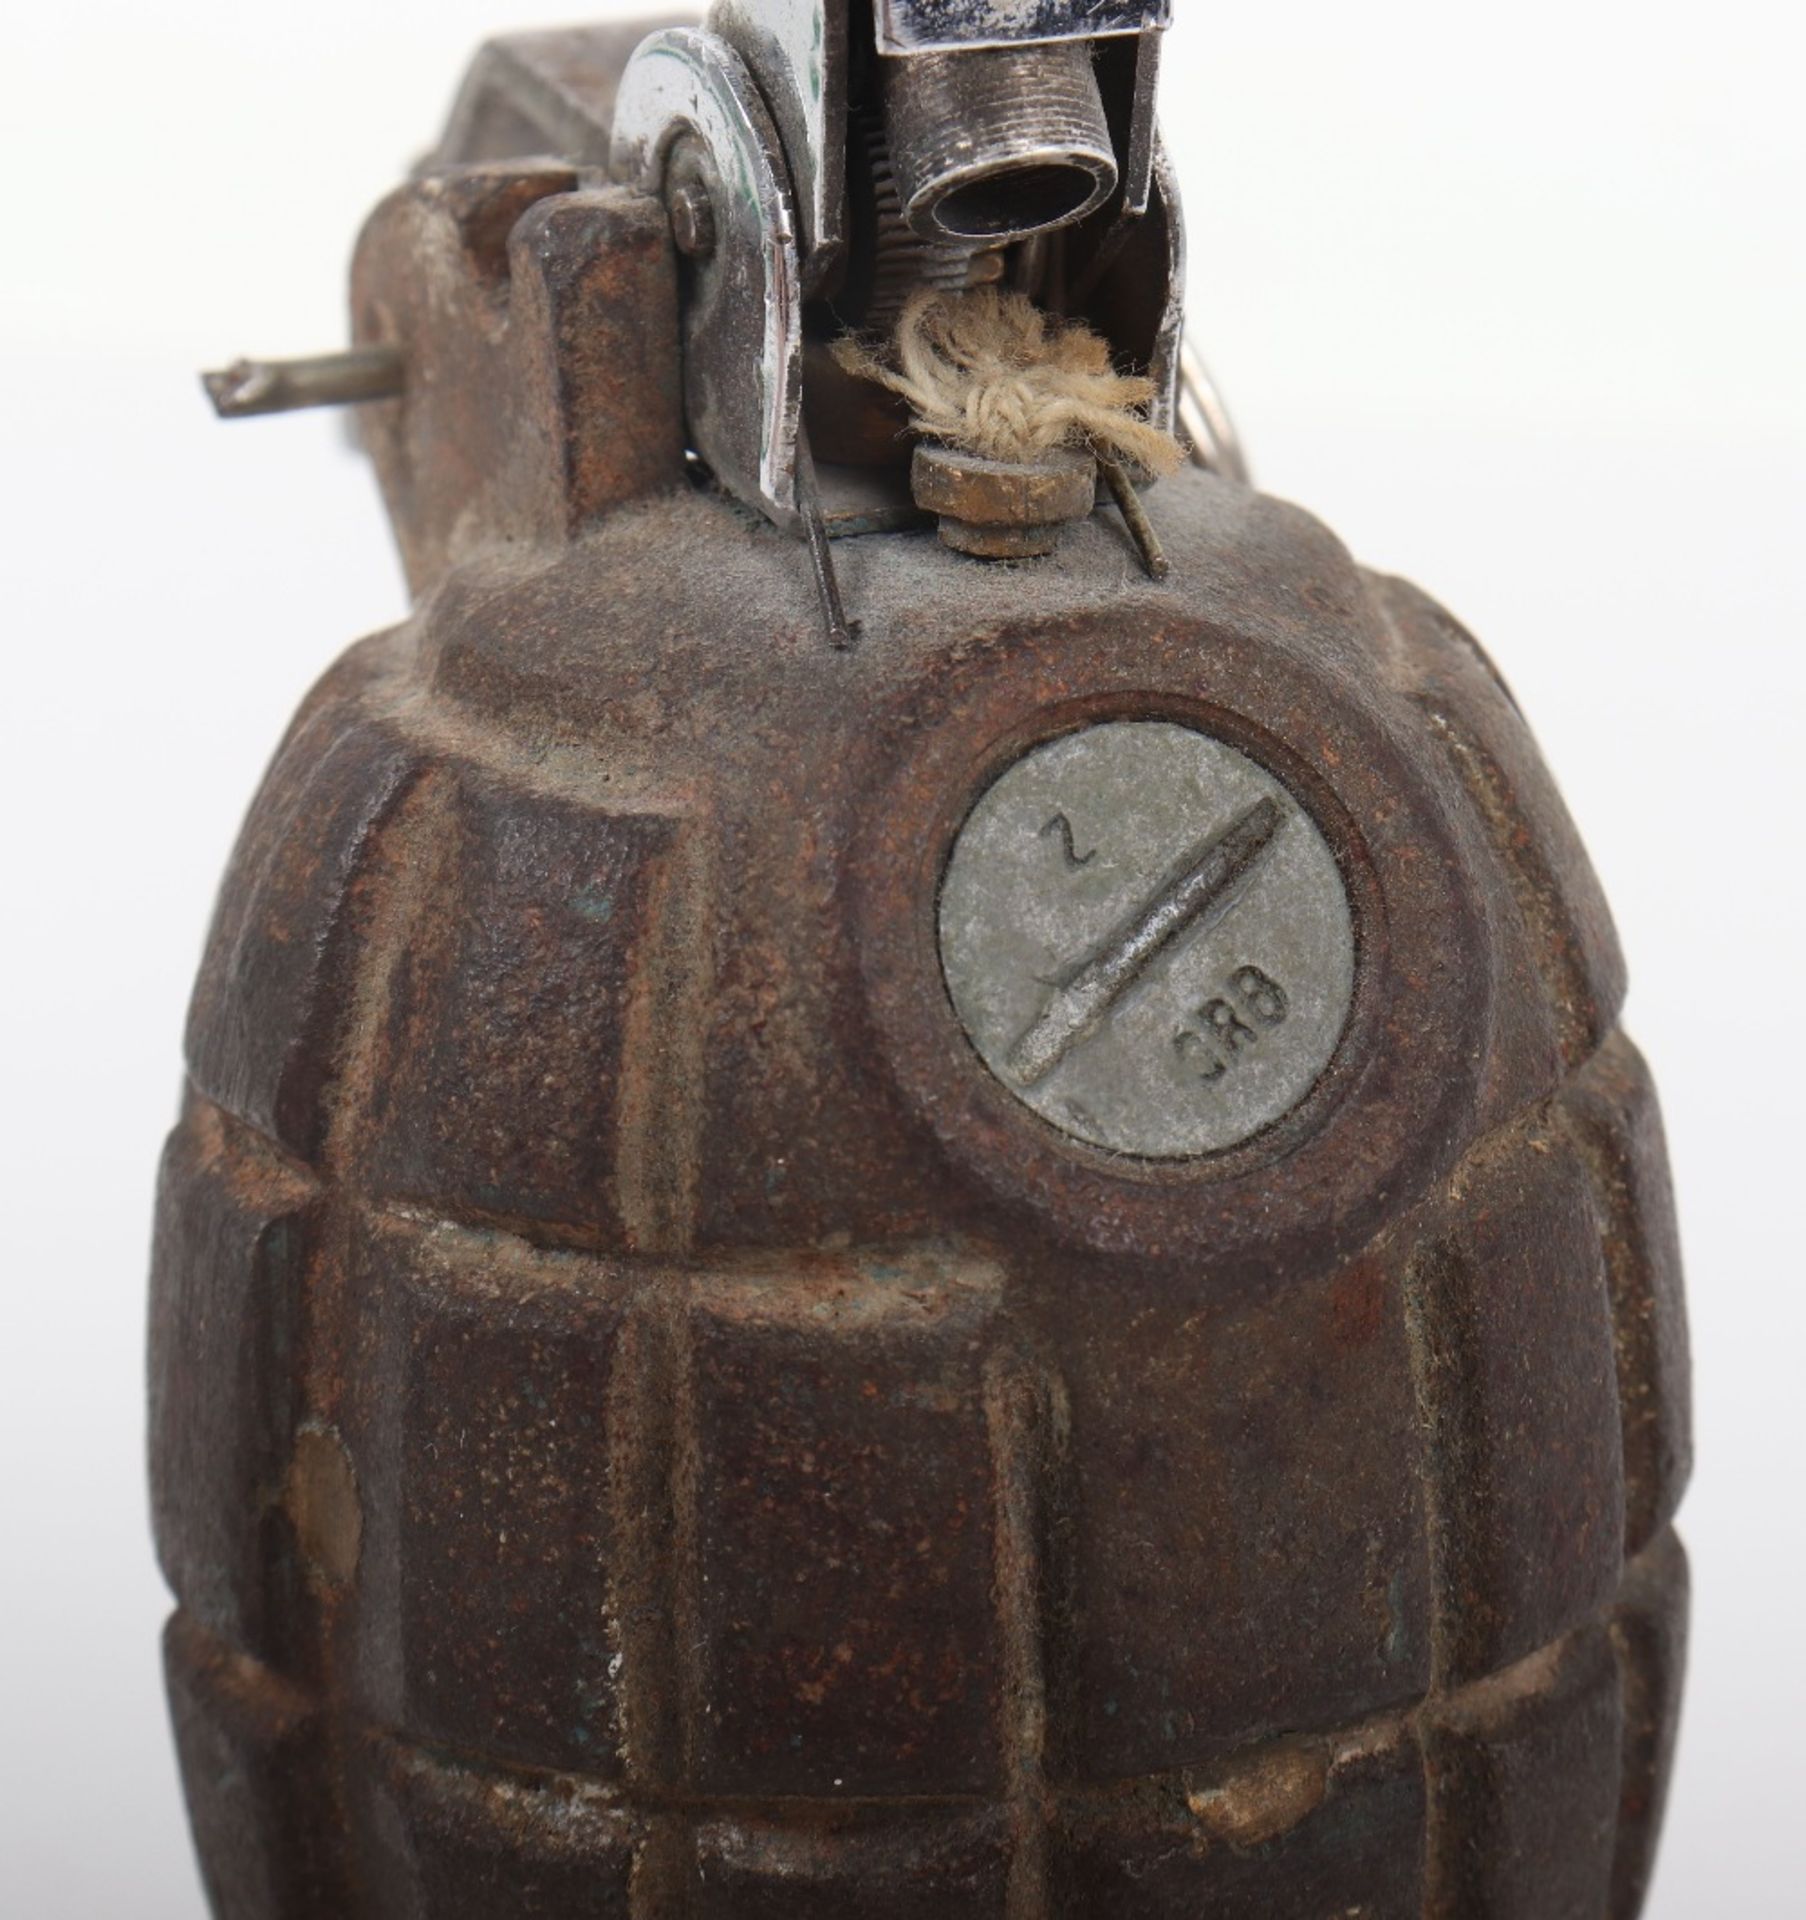 Inert British Mills Grenade Converted to Table Lighter - Image 2 of 6